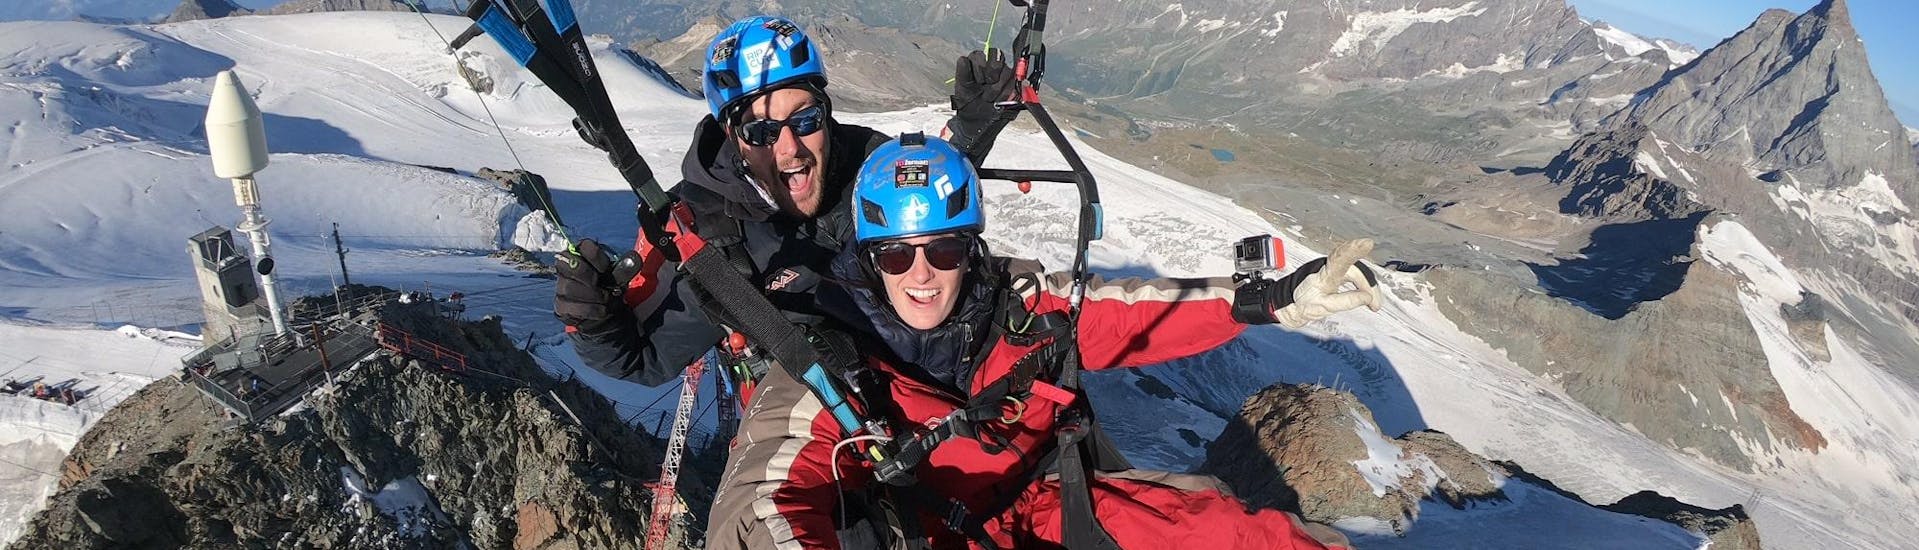 Un team di Matterhorn Paragliding sorvola i ghiacciai vicino a Zermatt.